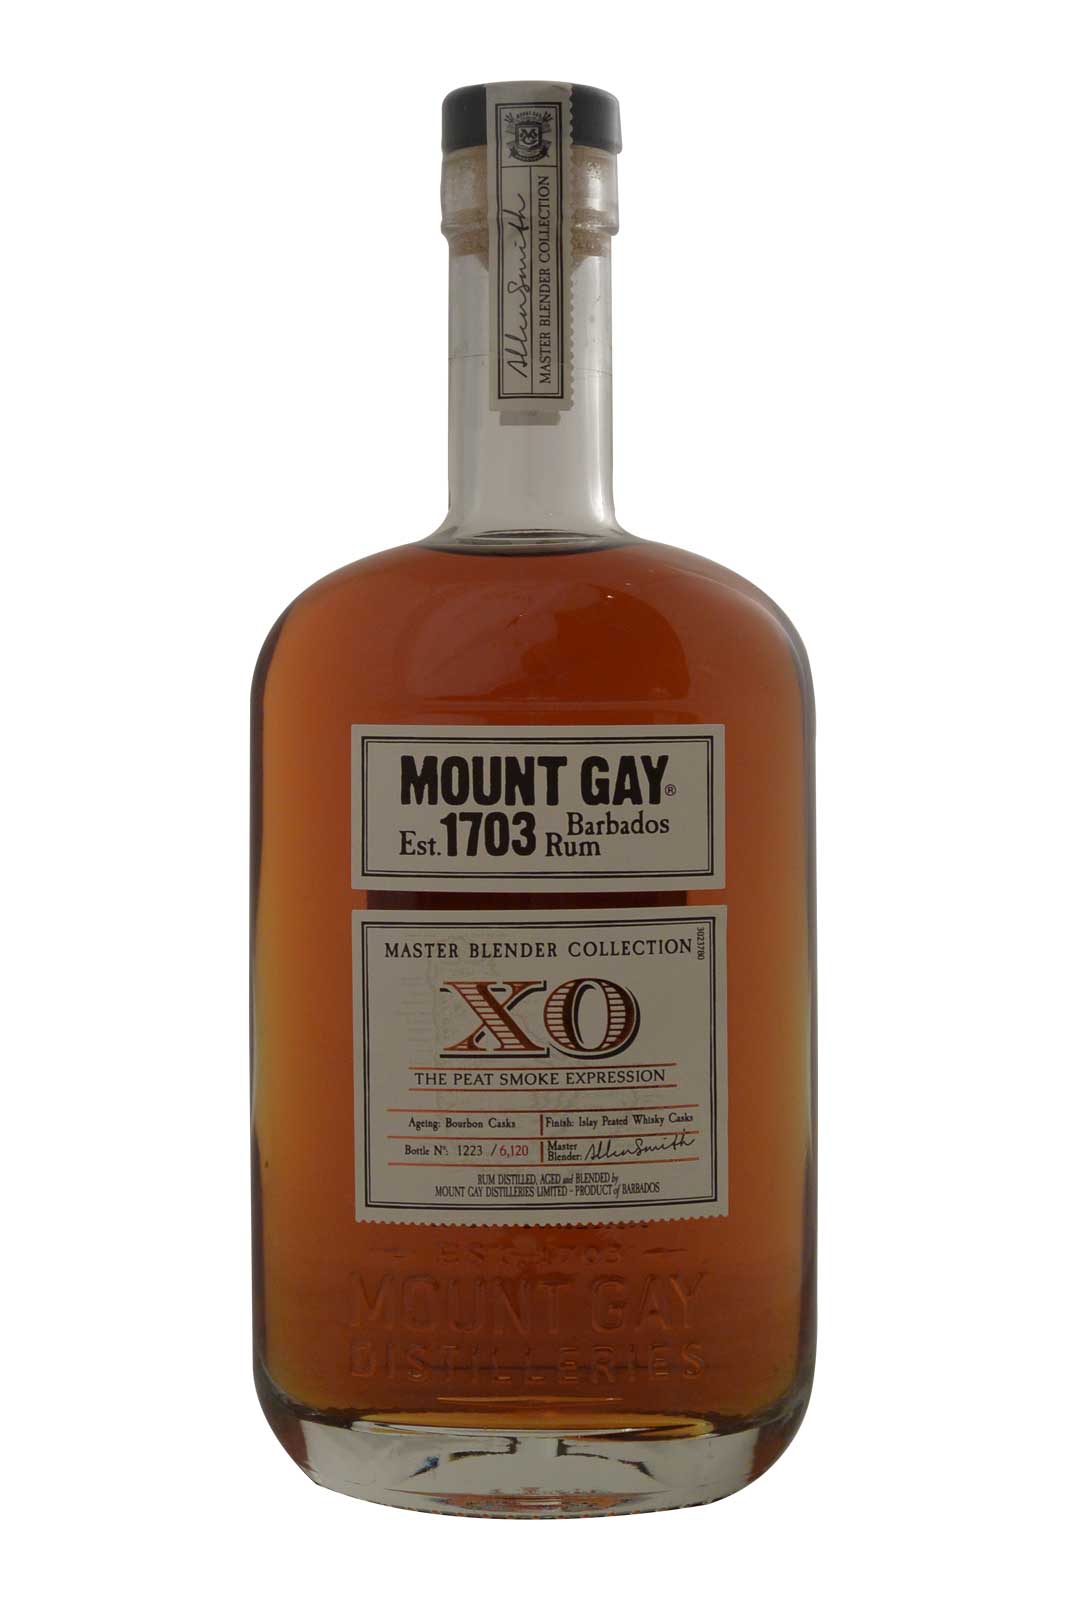 Mount Gay XO The Peat Smoke Expression